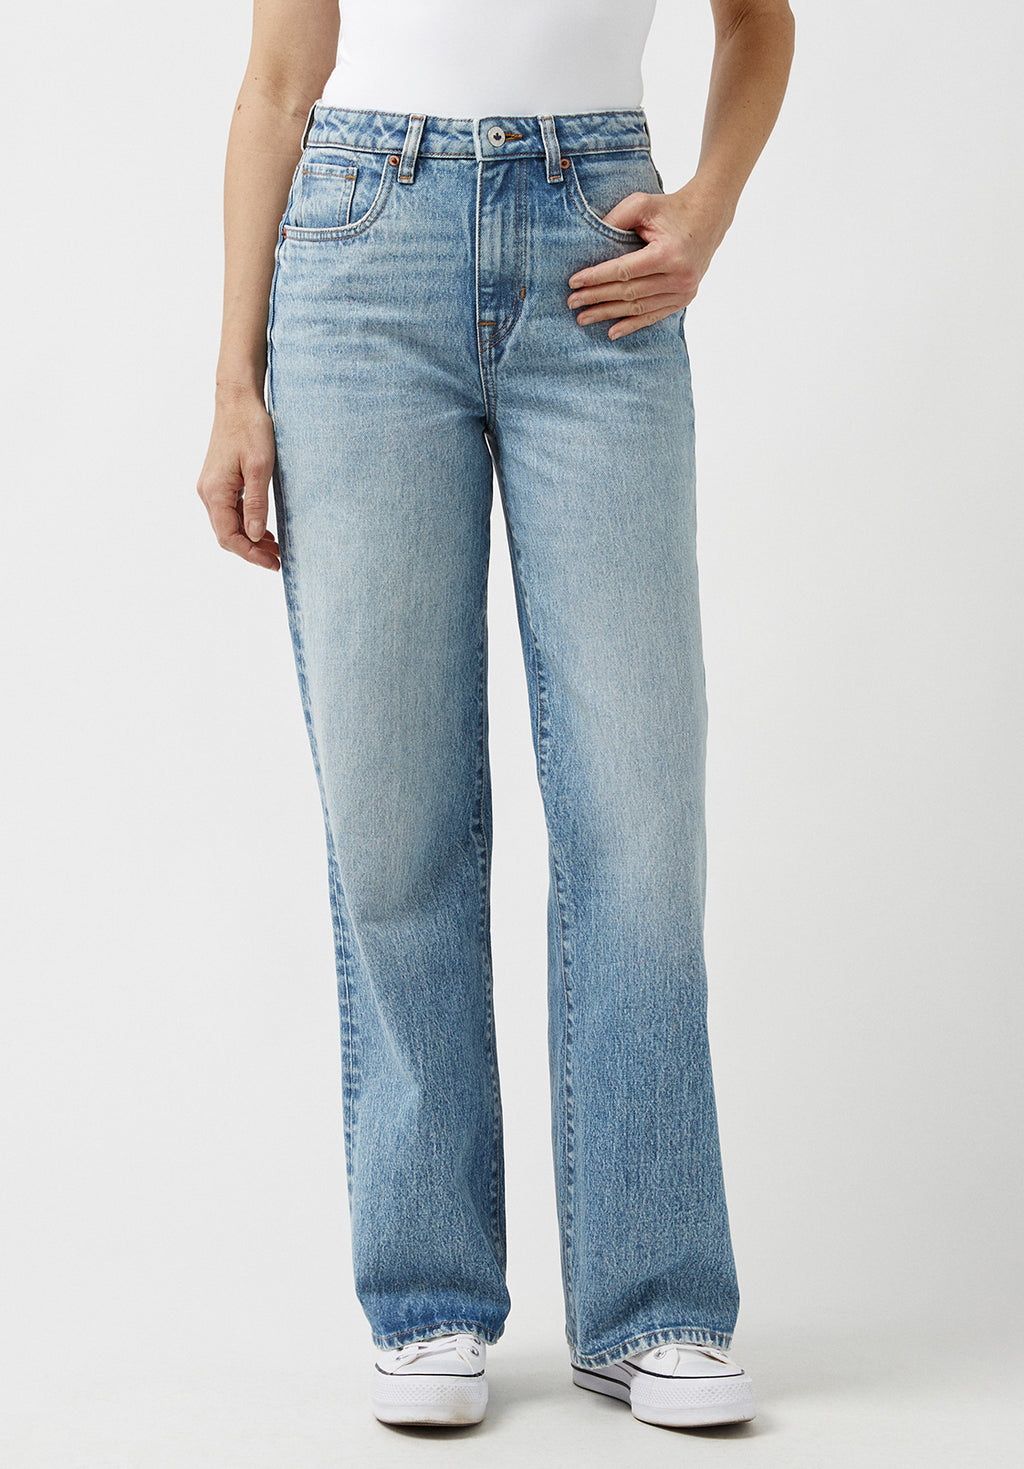 Evensleaves Women's Jeans, Solid Vintage High Waist Straight-Leg